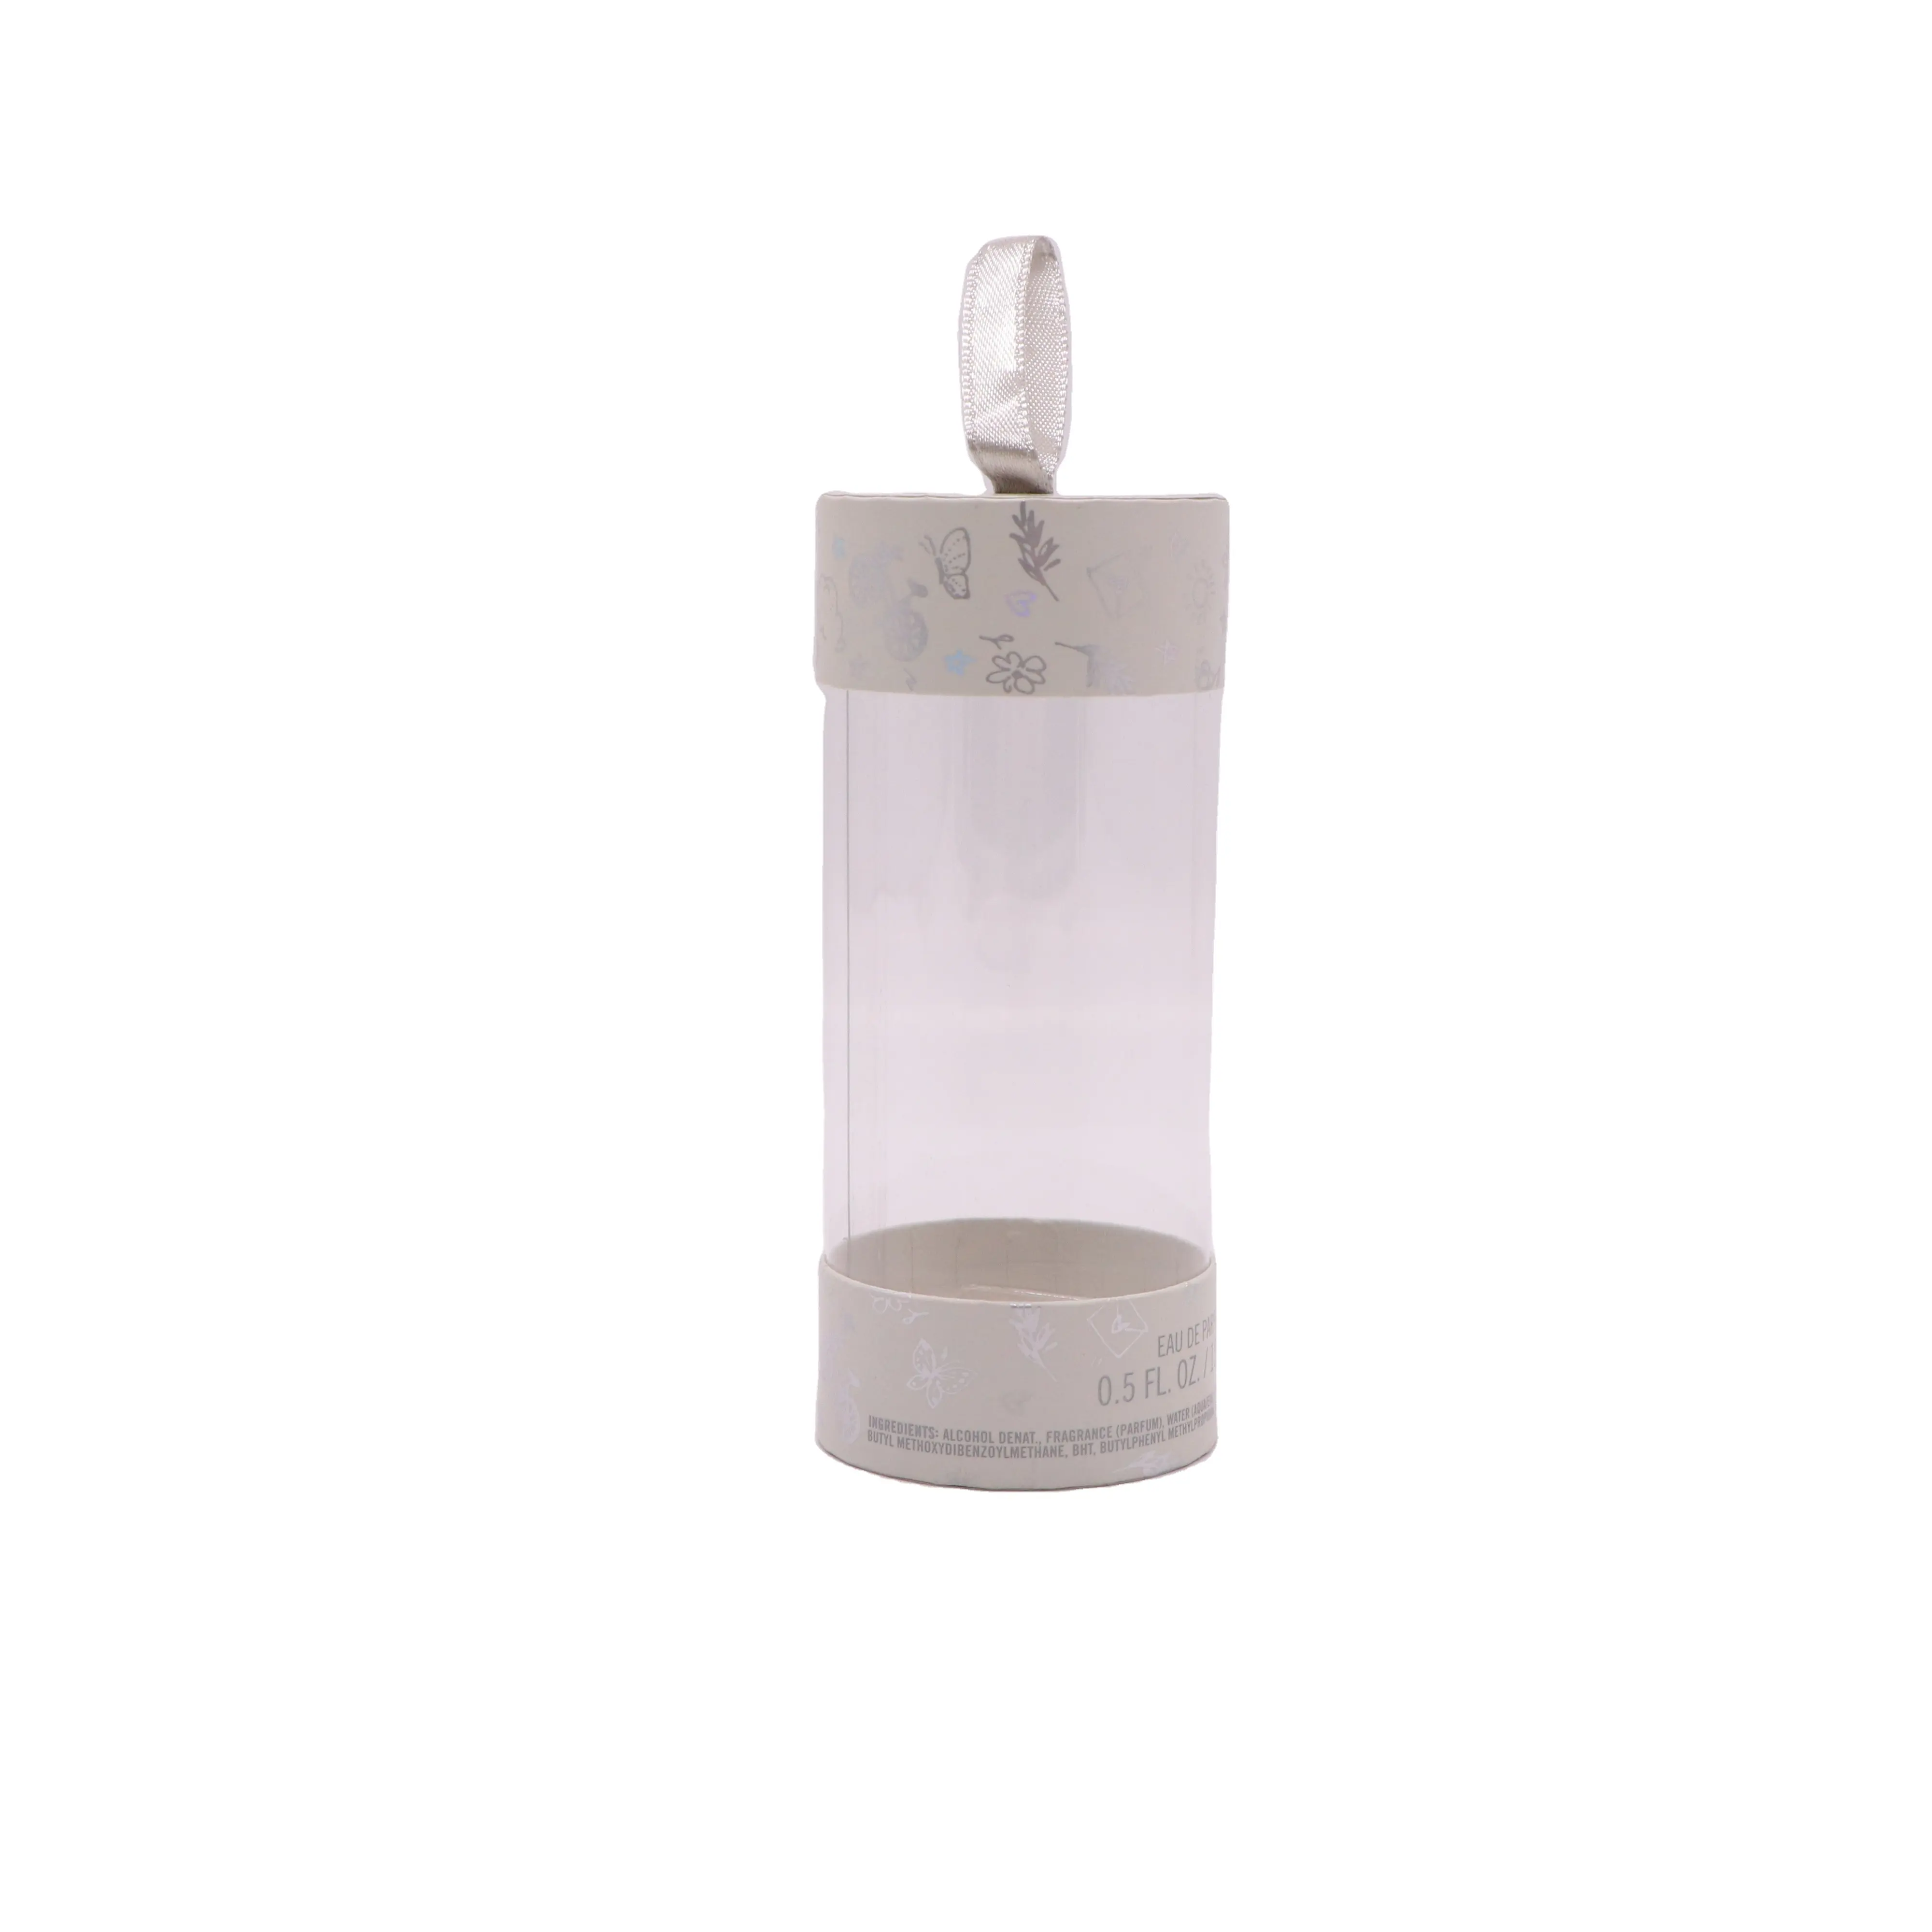 Caja de embalaje de cilindro transparente, cilindro de plástico transparente de Pvc con tapa, personalizado, alta calidad